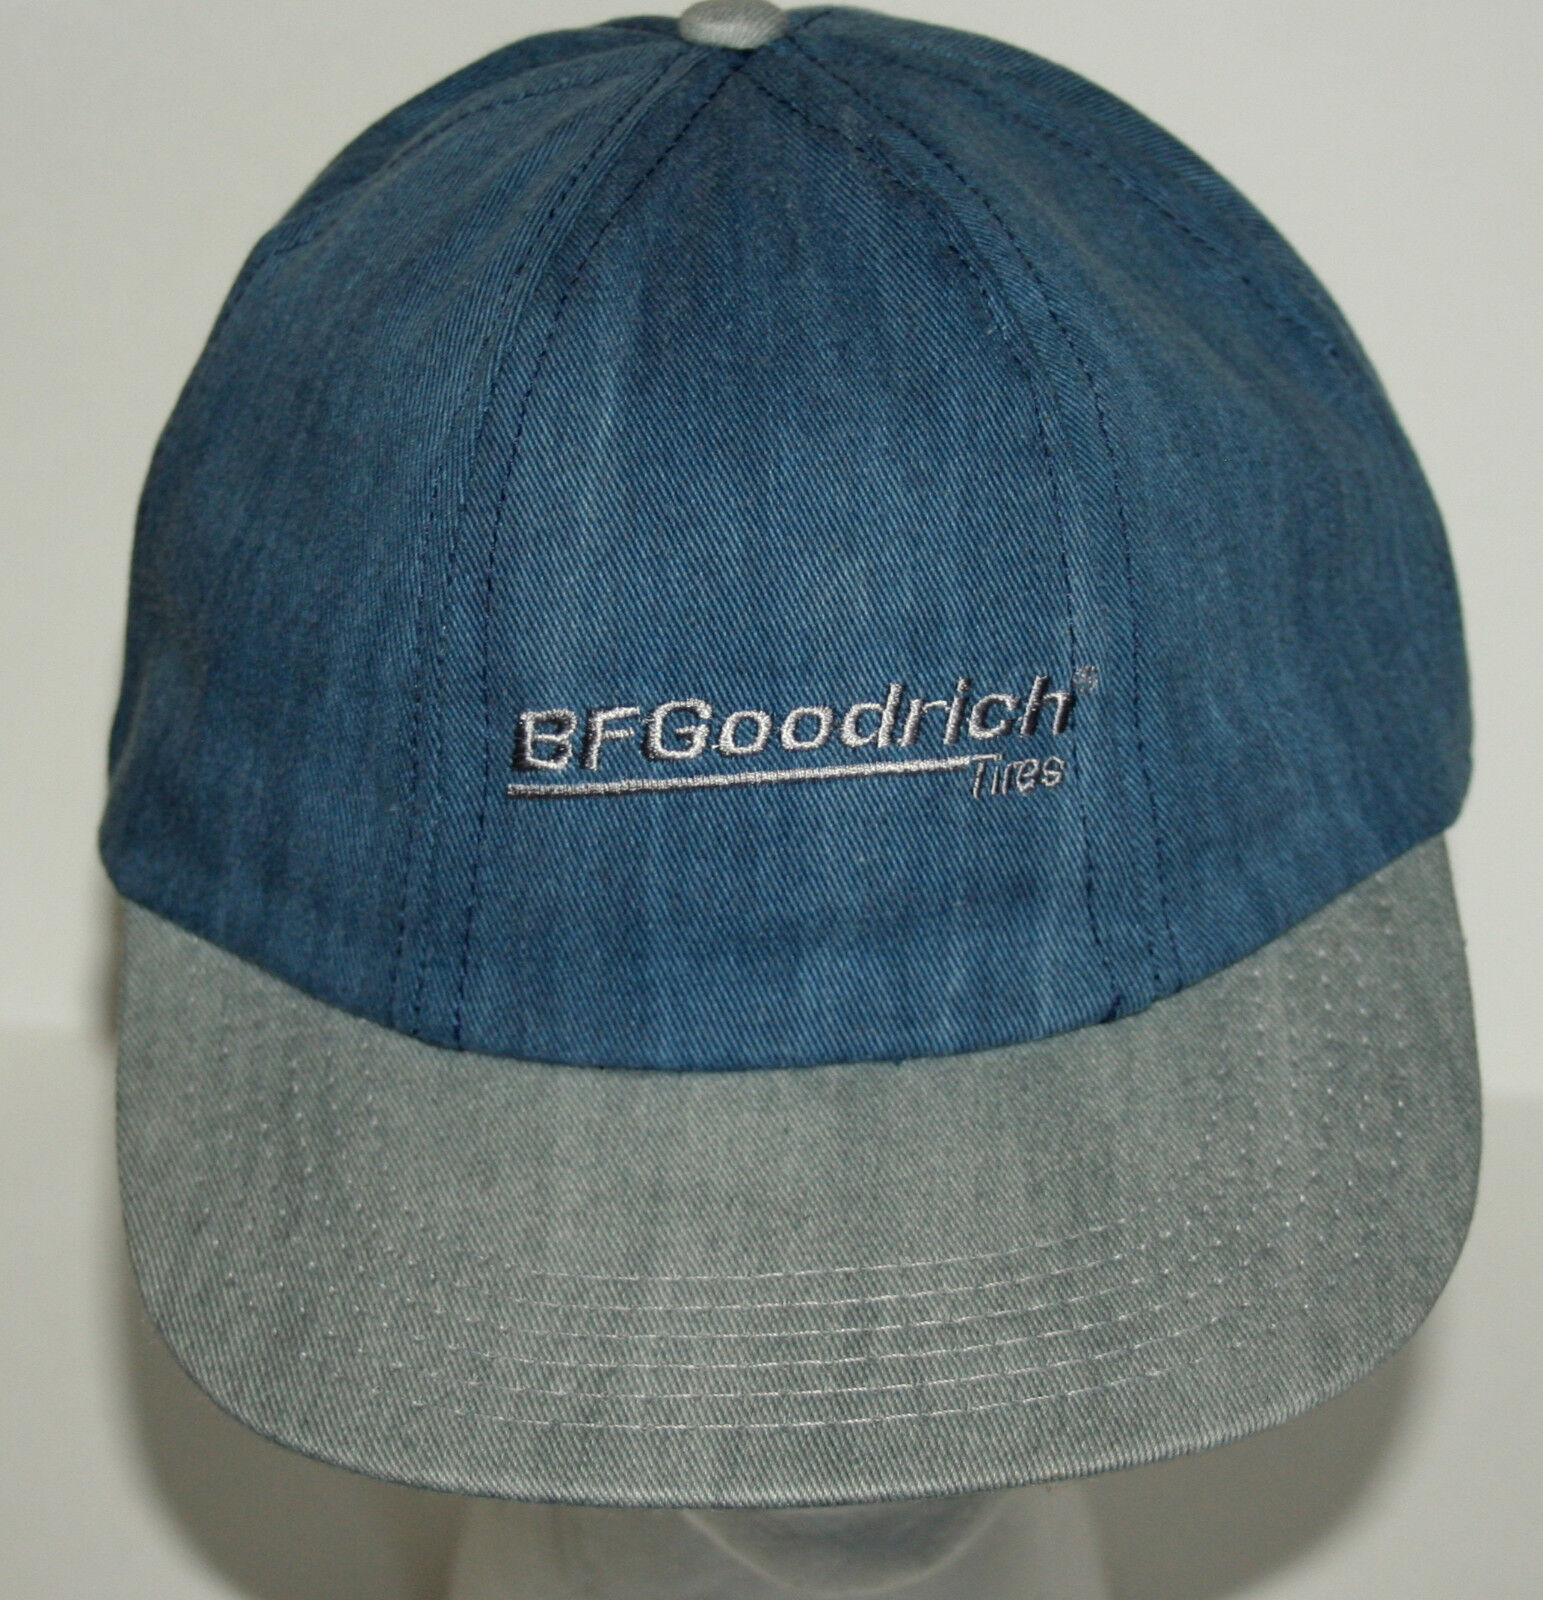 Vintage 1980s BF Goodrich Tire Baseball Blue Jean Snap Back Cap Hat New NOS OSFA